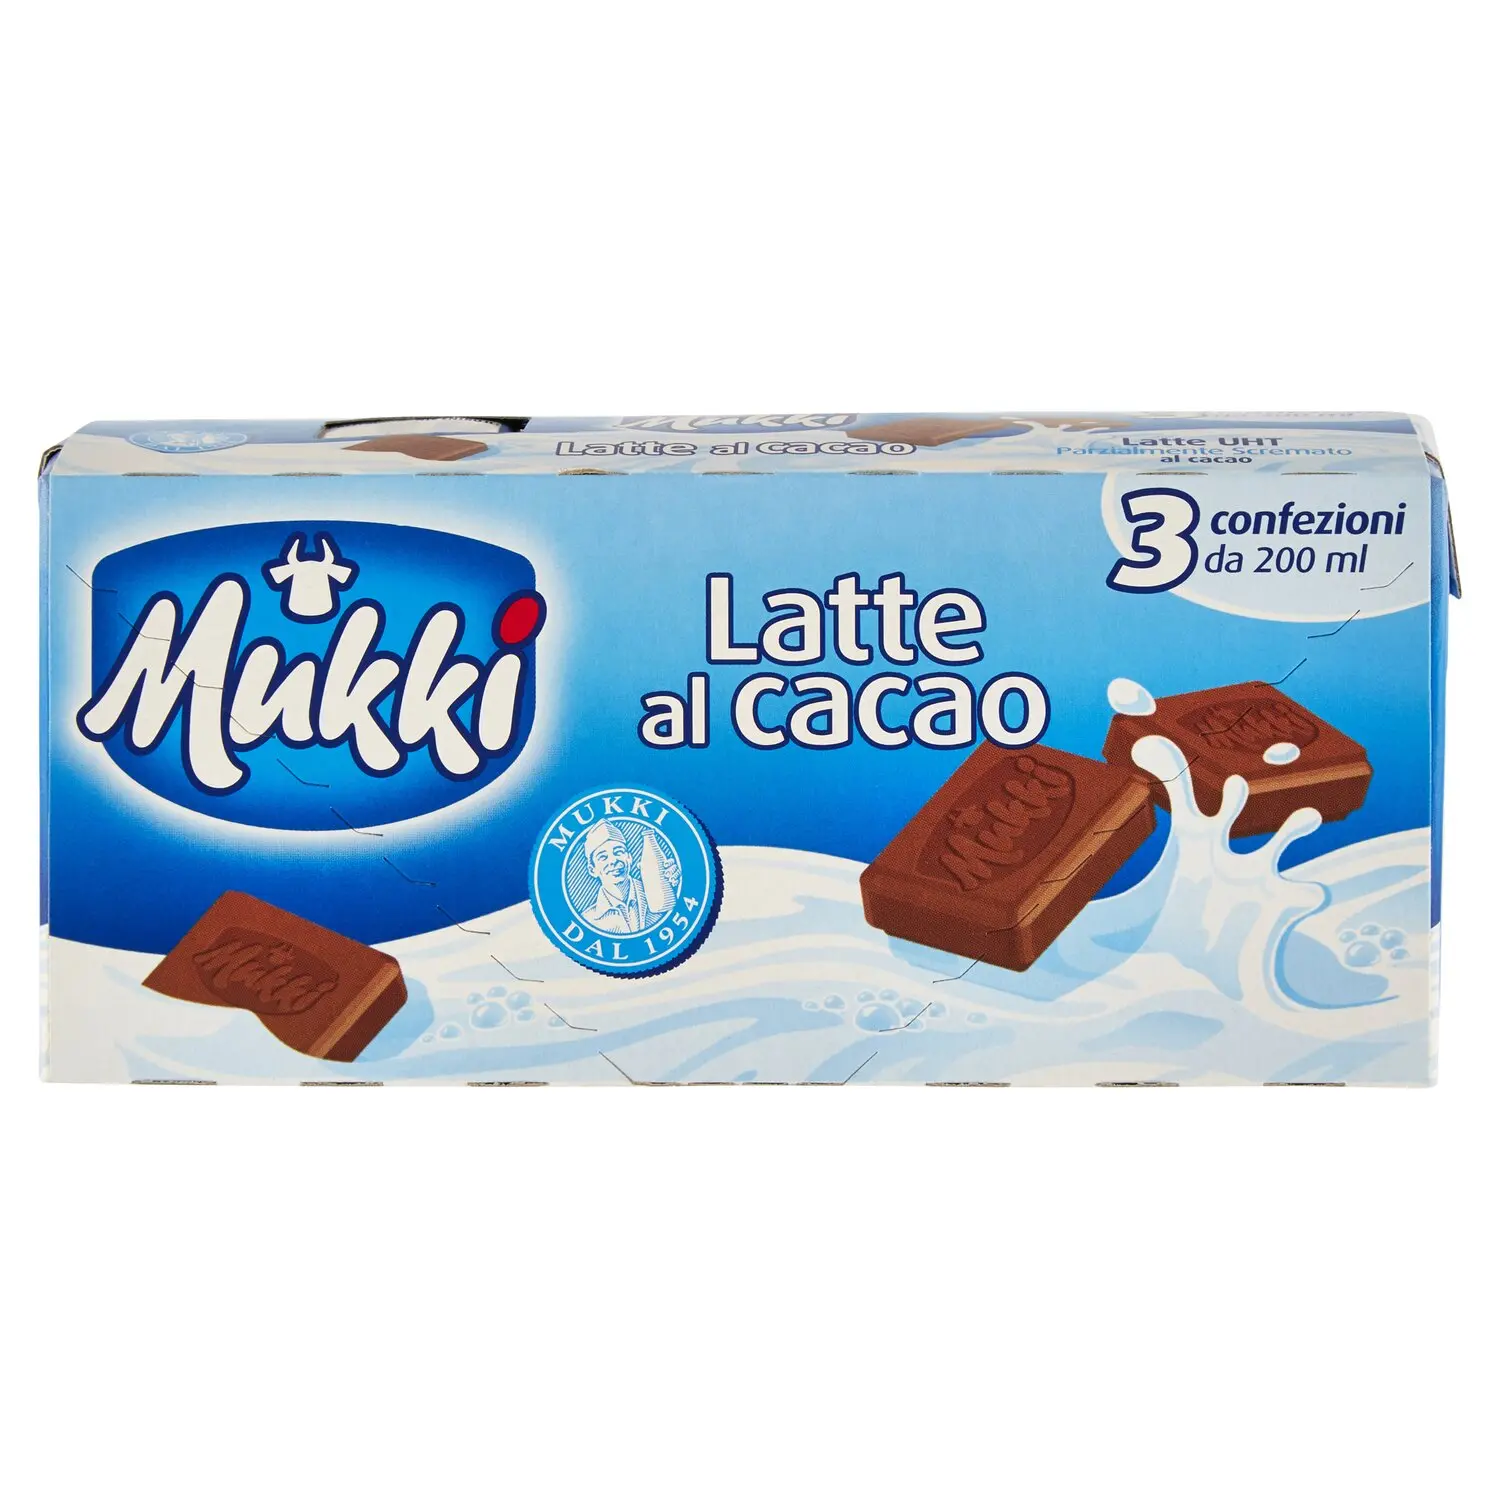 Mukki Latte al cacao 3 x 200 ml